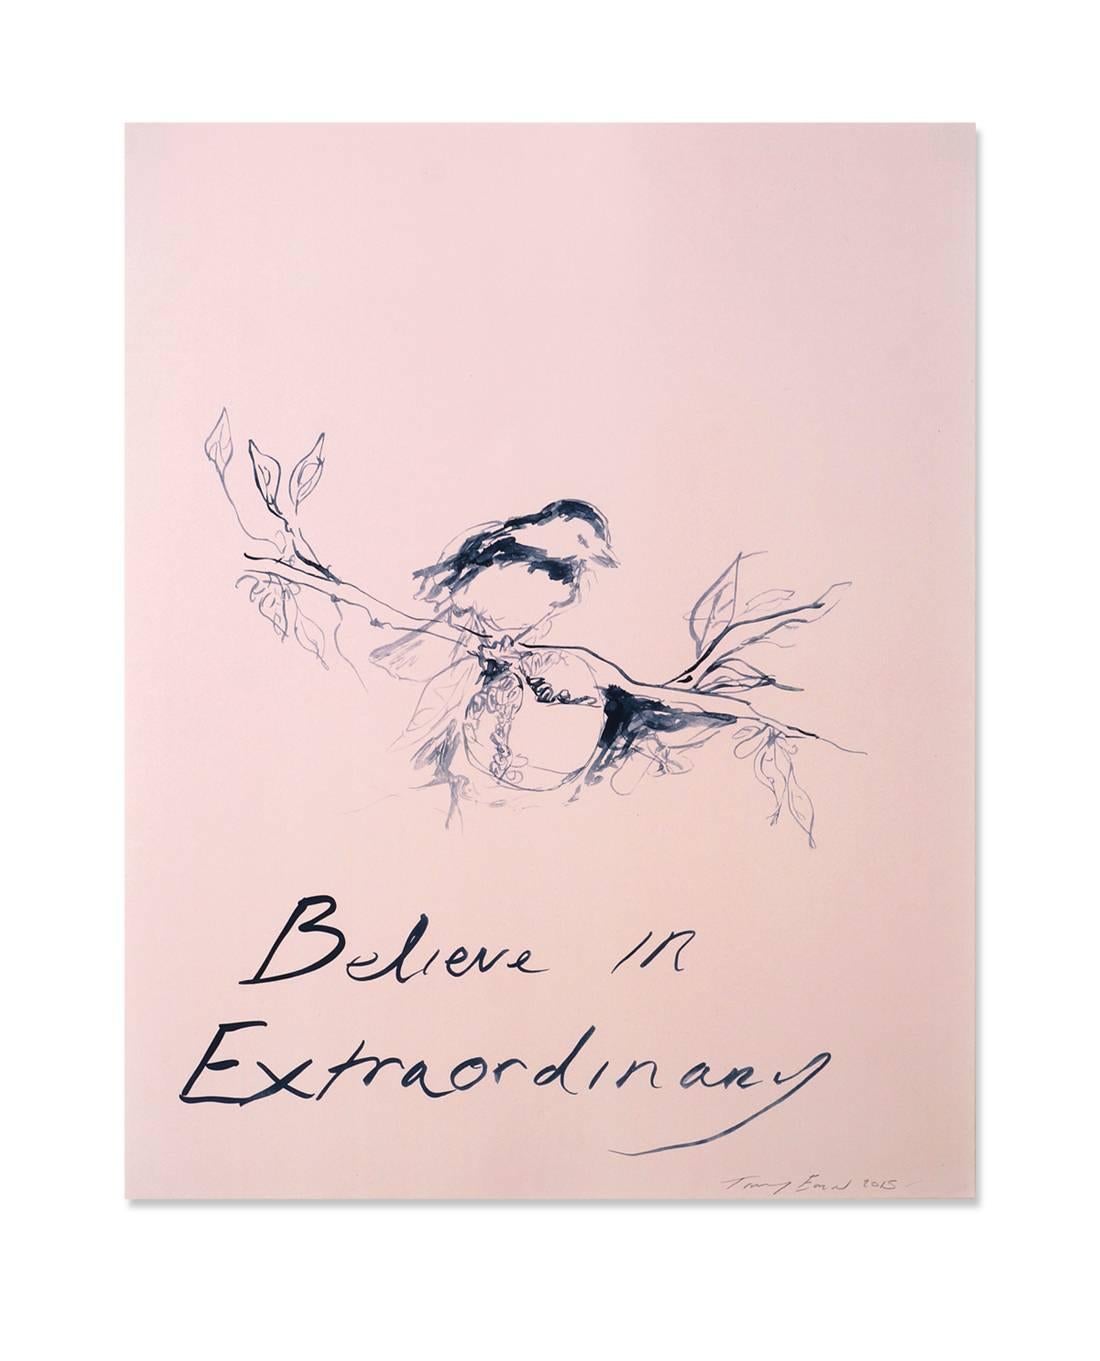 Tracey Emin Interior Print - Believe in Extraordinary